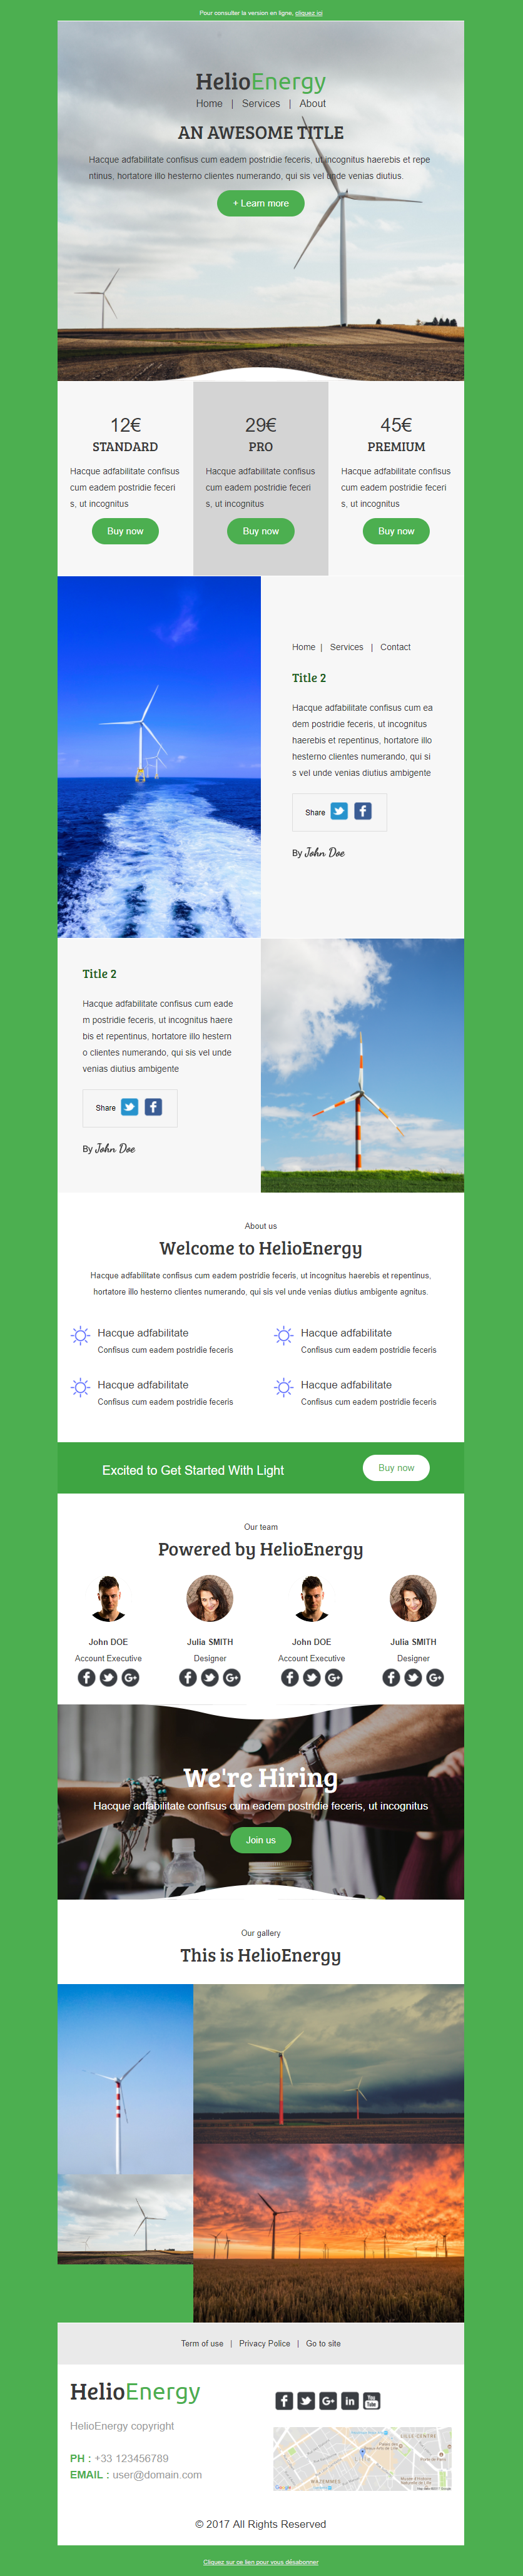 Templates Emailing Helio Energy Sarbacane